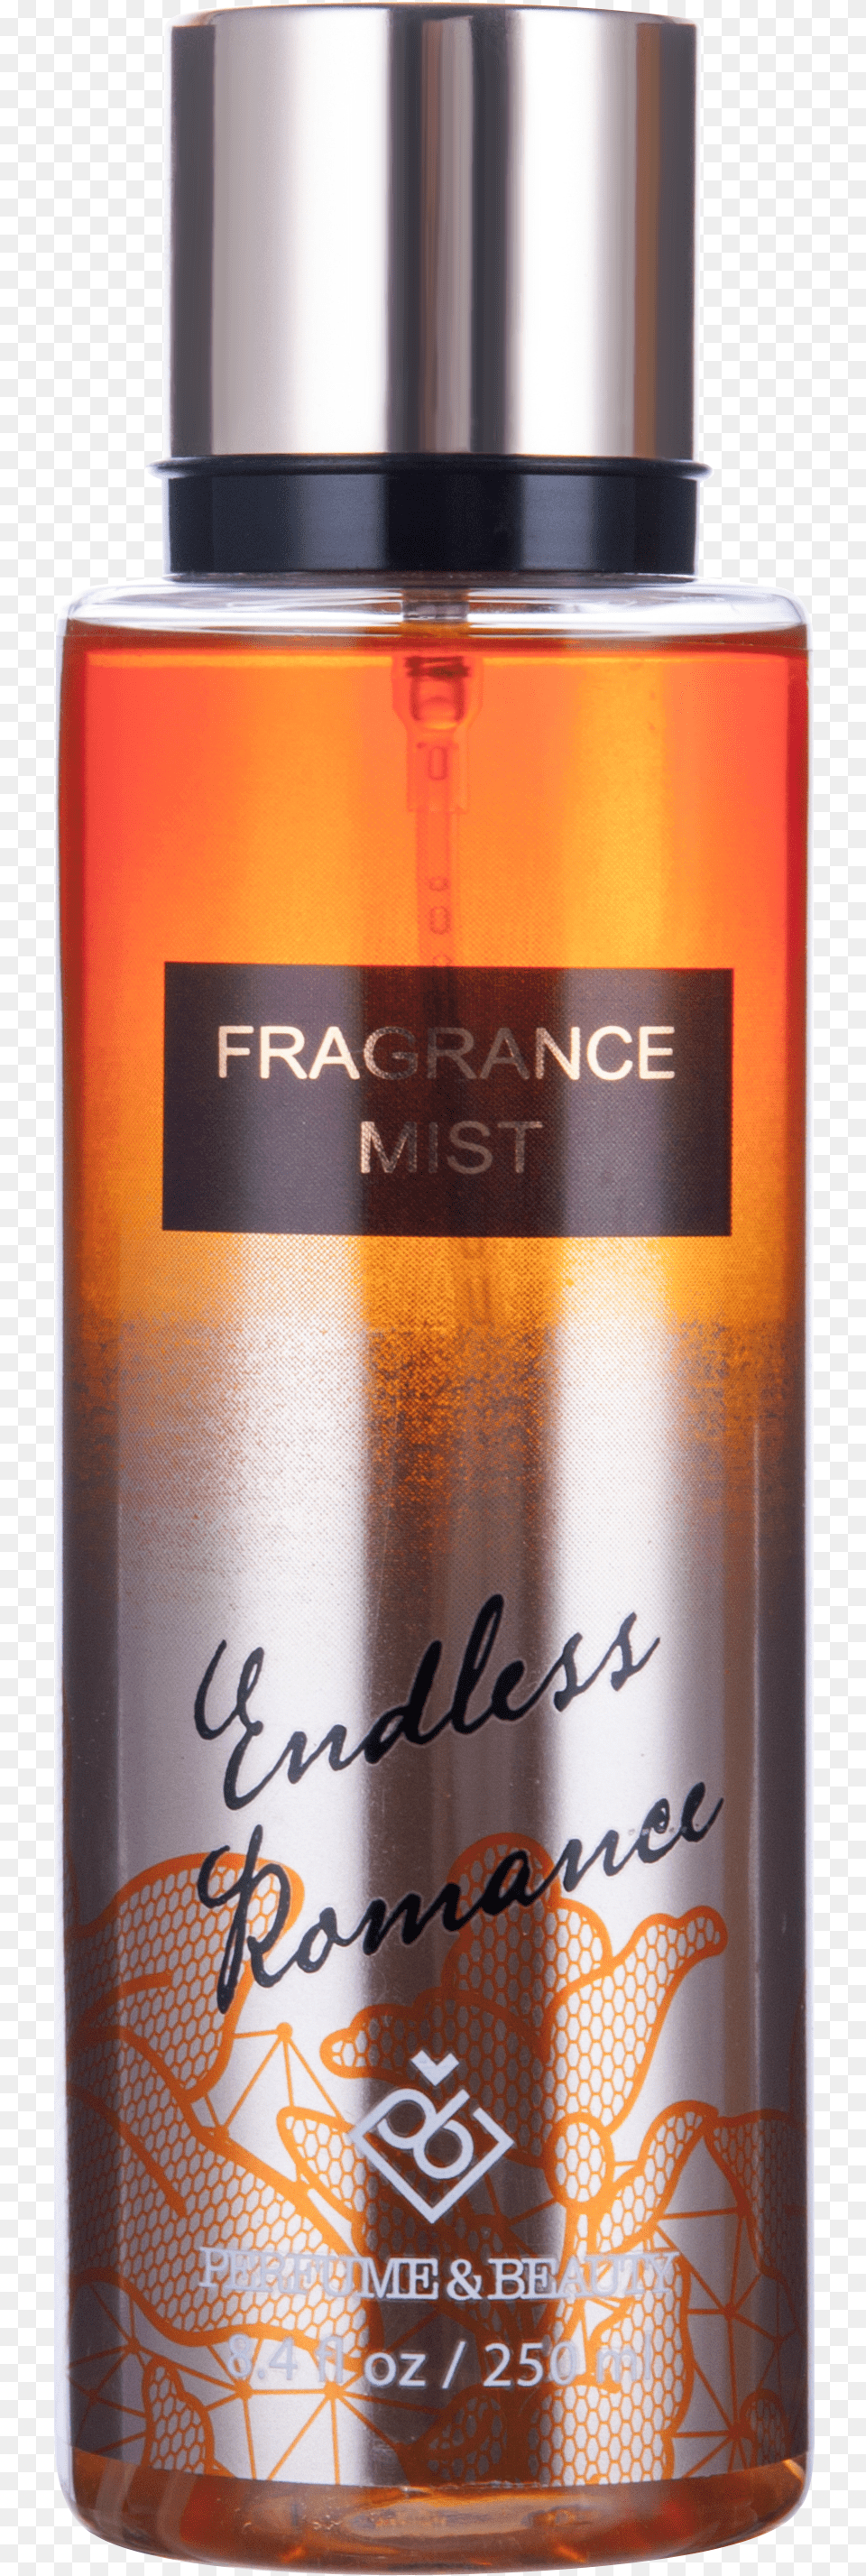 Perfumeampbeauty Fragrance Mist Endless Romance Women Perfume, Bottle, Cosmetics Png Image